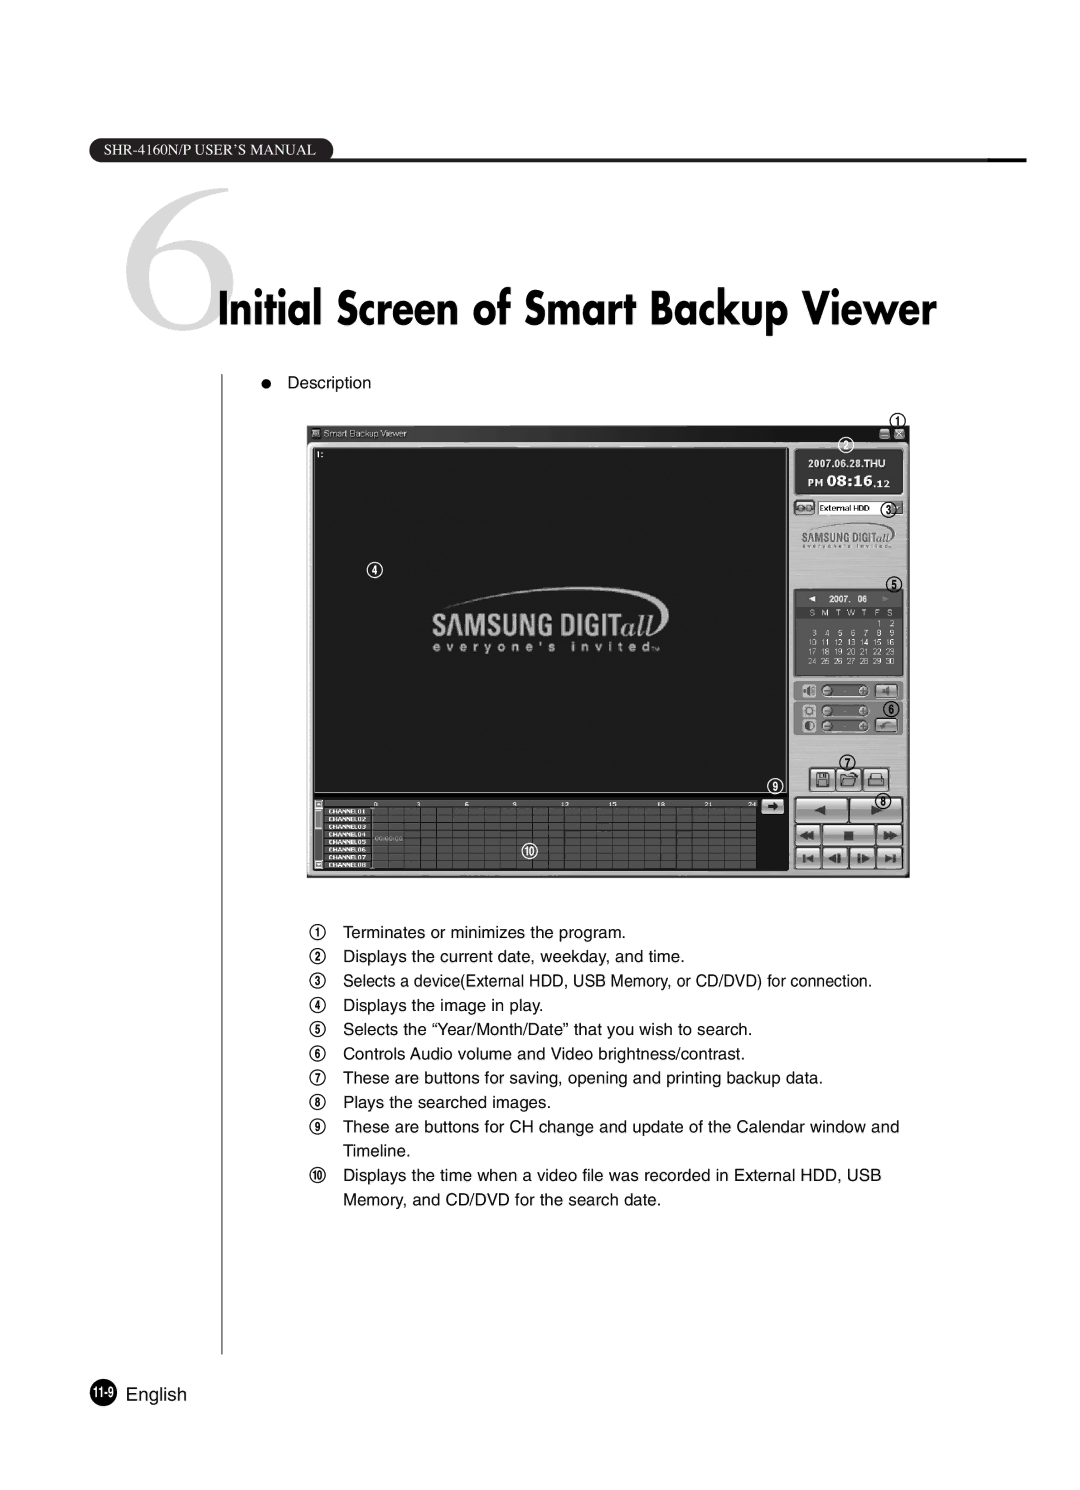 Samsung SHR-4160P manual 6Initial Screen of Smart Backup Viewer, 11-9English 